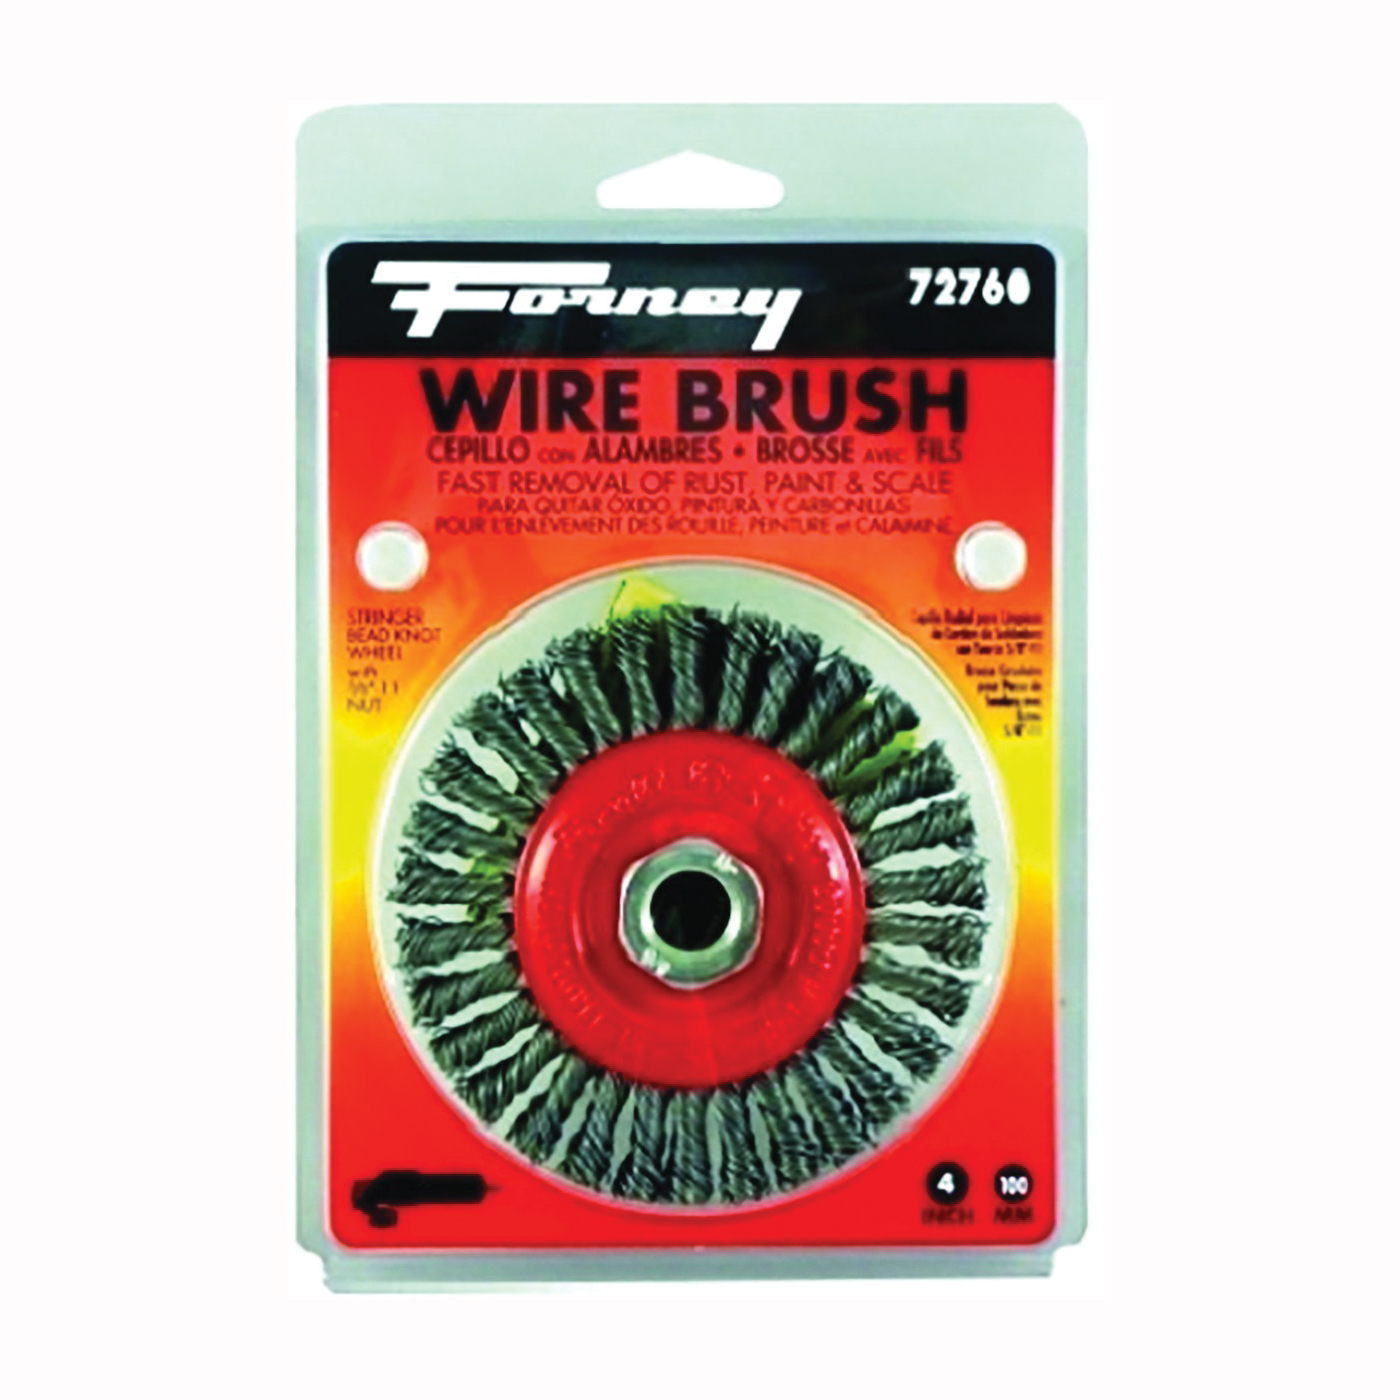 72760 Wire Wheel Brush, 4 in Dia, 5/8-11 Arbor/Shank, 0.02 in Dia Bristle, Carbon Steel Bristle